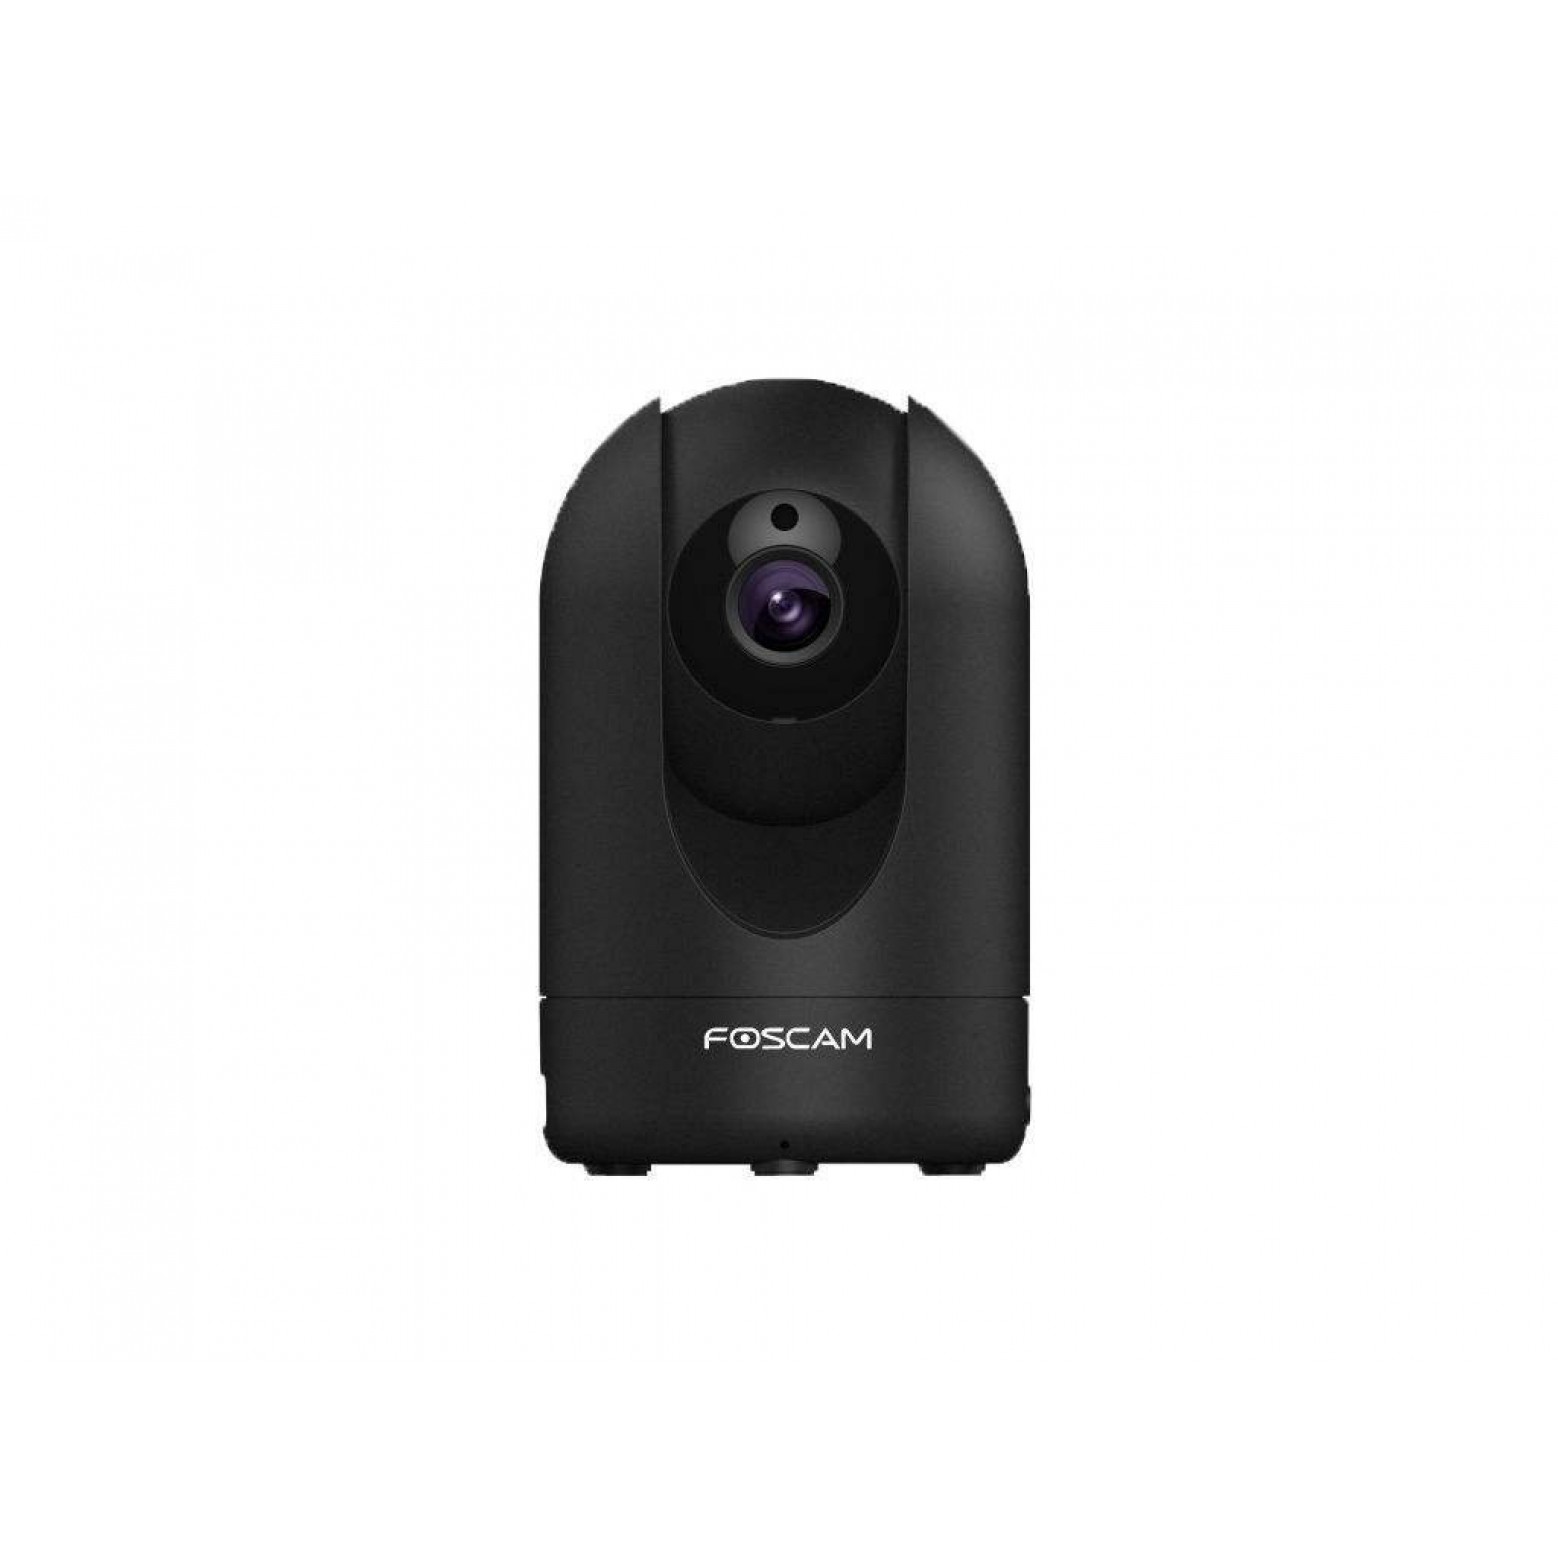 Foscam R2 Full HD 2MP pan-kantel camera